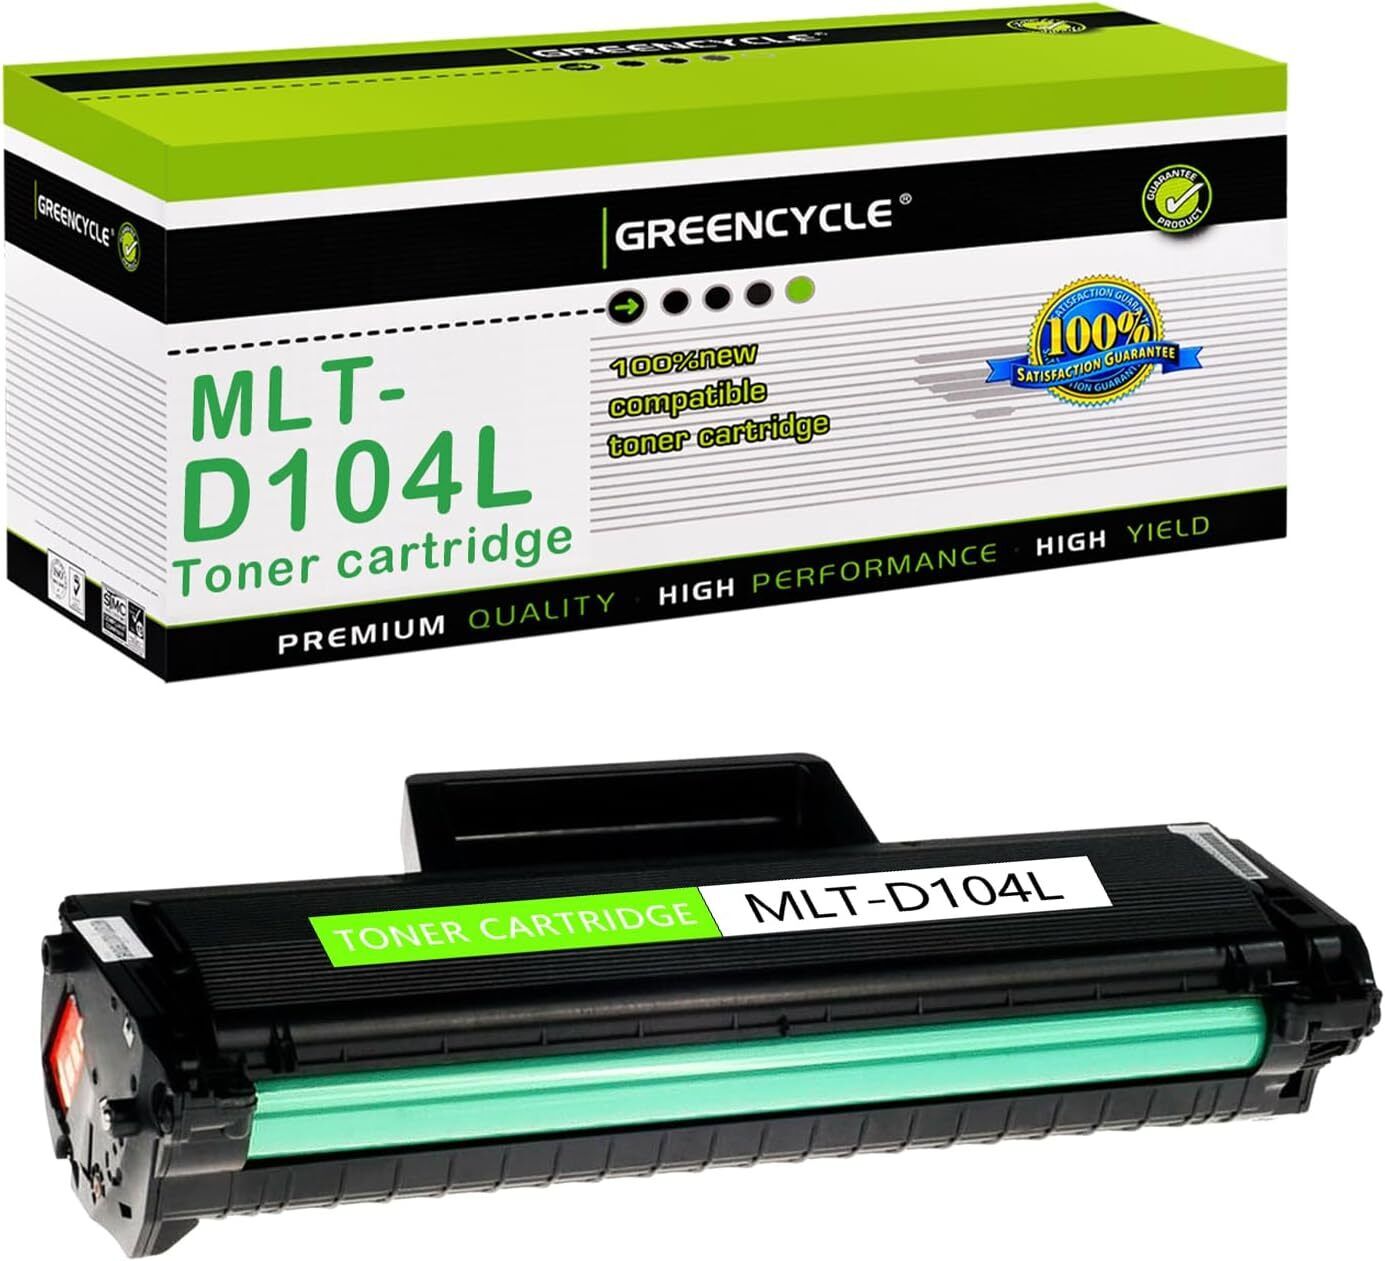 GREENCYCLE MLT-D104S MLT-D104L Toner Cartridge for Samsung Ml1665 Ml1660 Ml1865w